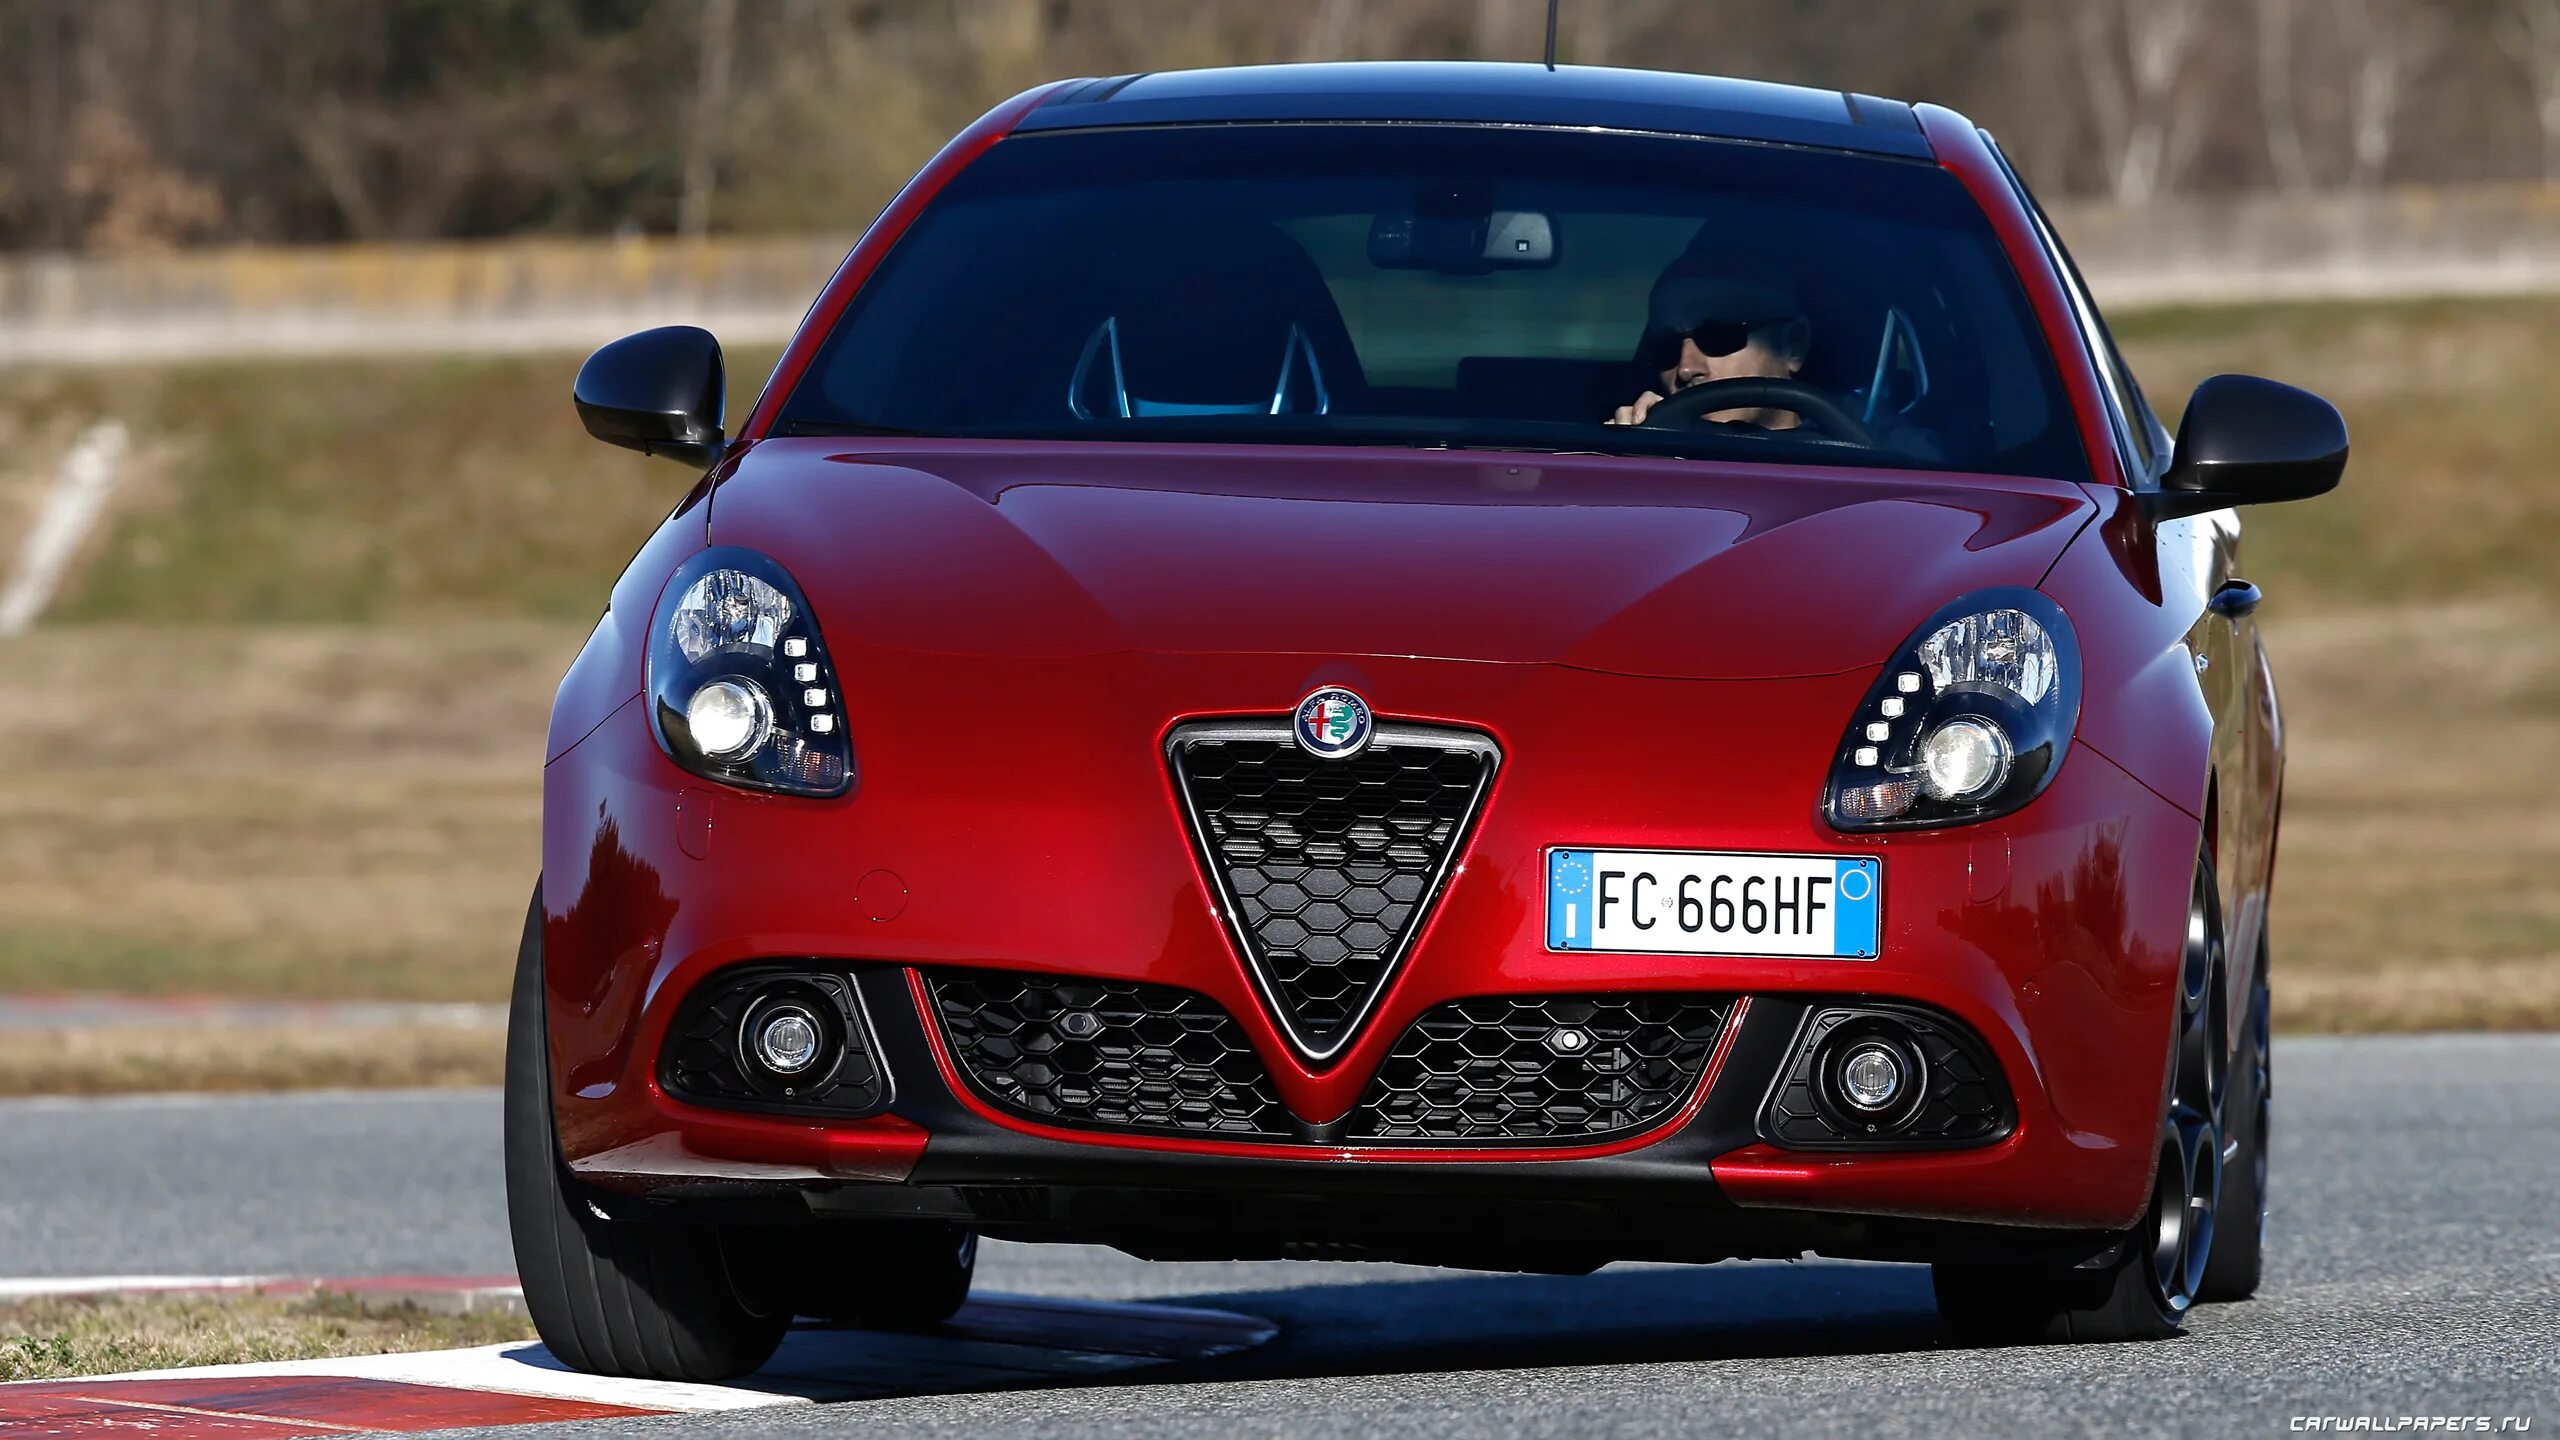 Альфа ромео авито. Alfa Romeo Giulietta 2016. Машина Alfa Romeo Giulietta. Альфа Ромео Гиулиетта 2016. Alfa Romeo Giulietta 2017.